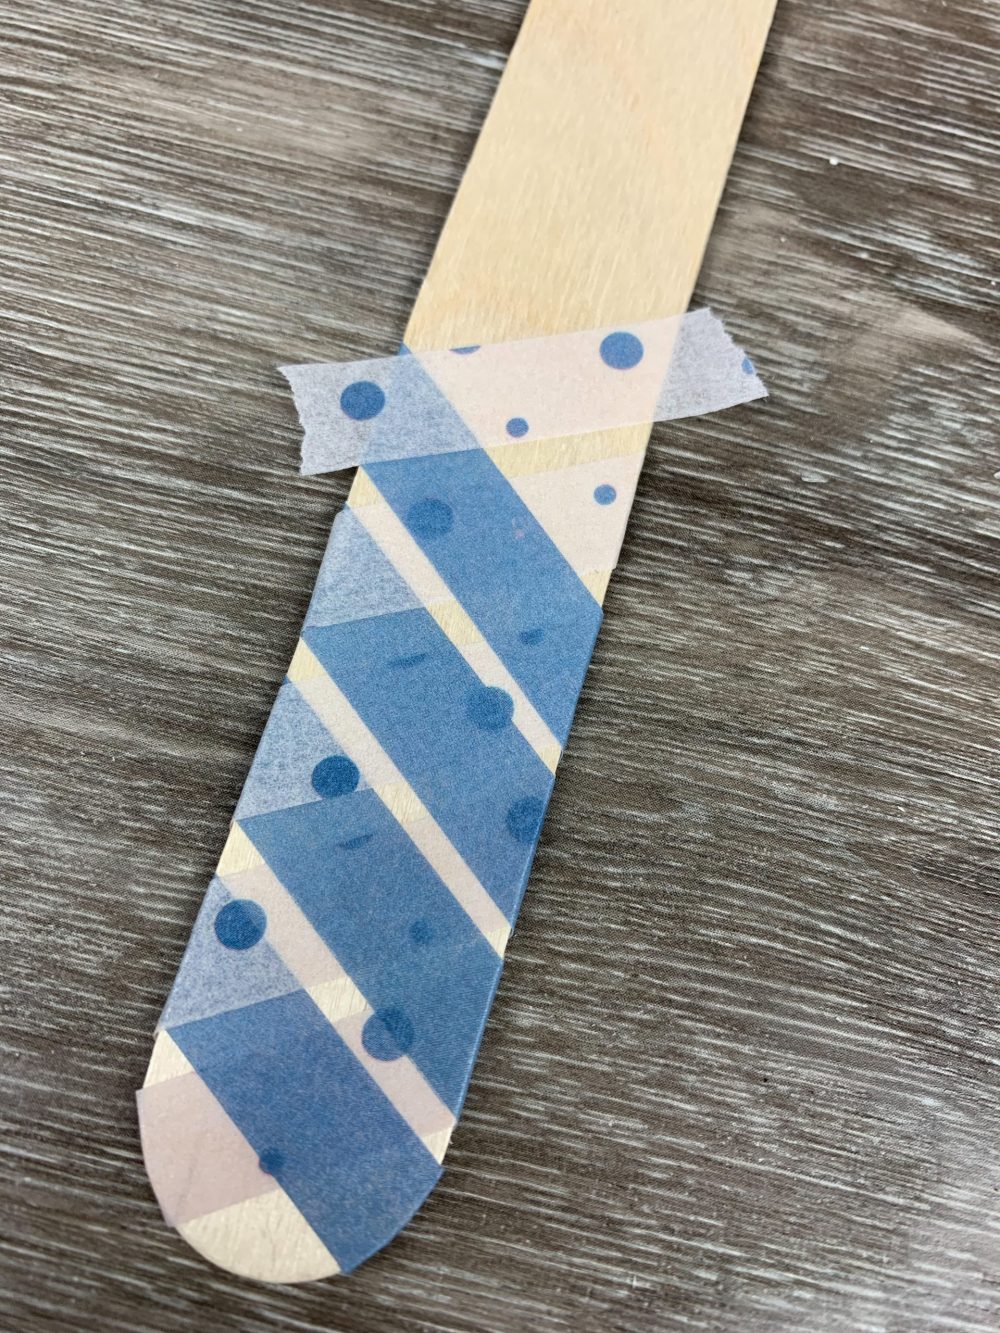 Decorating bookmark with washi tape